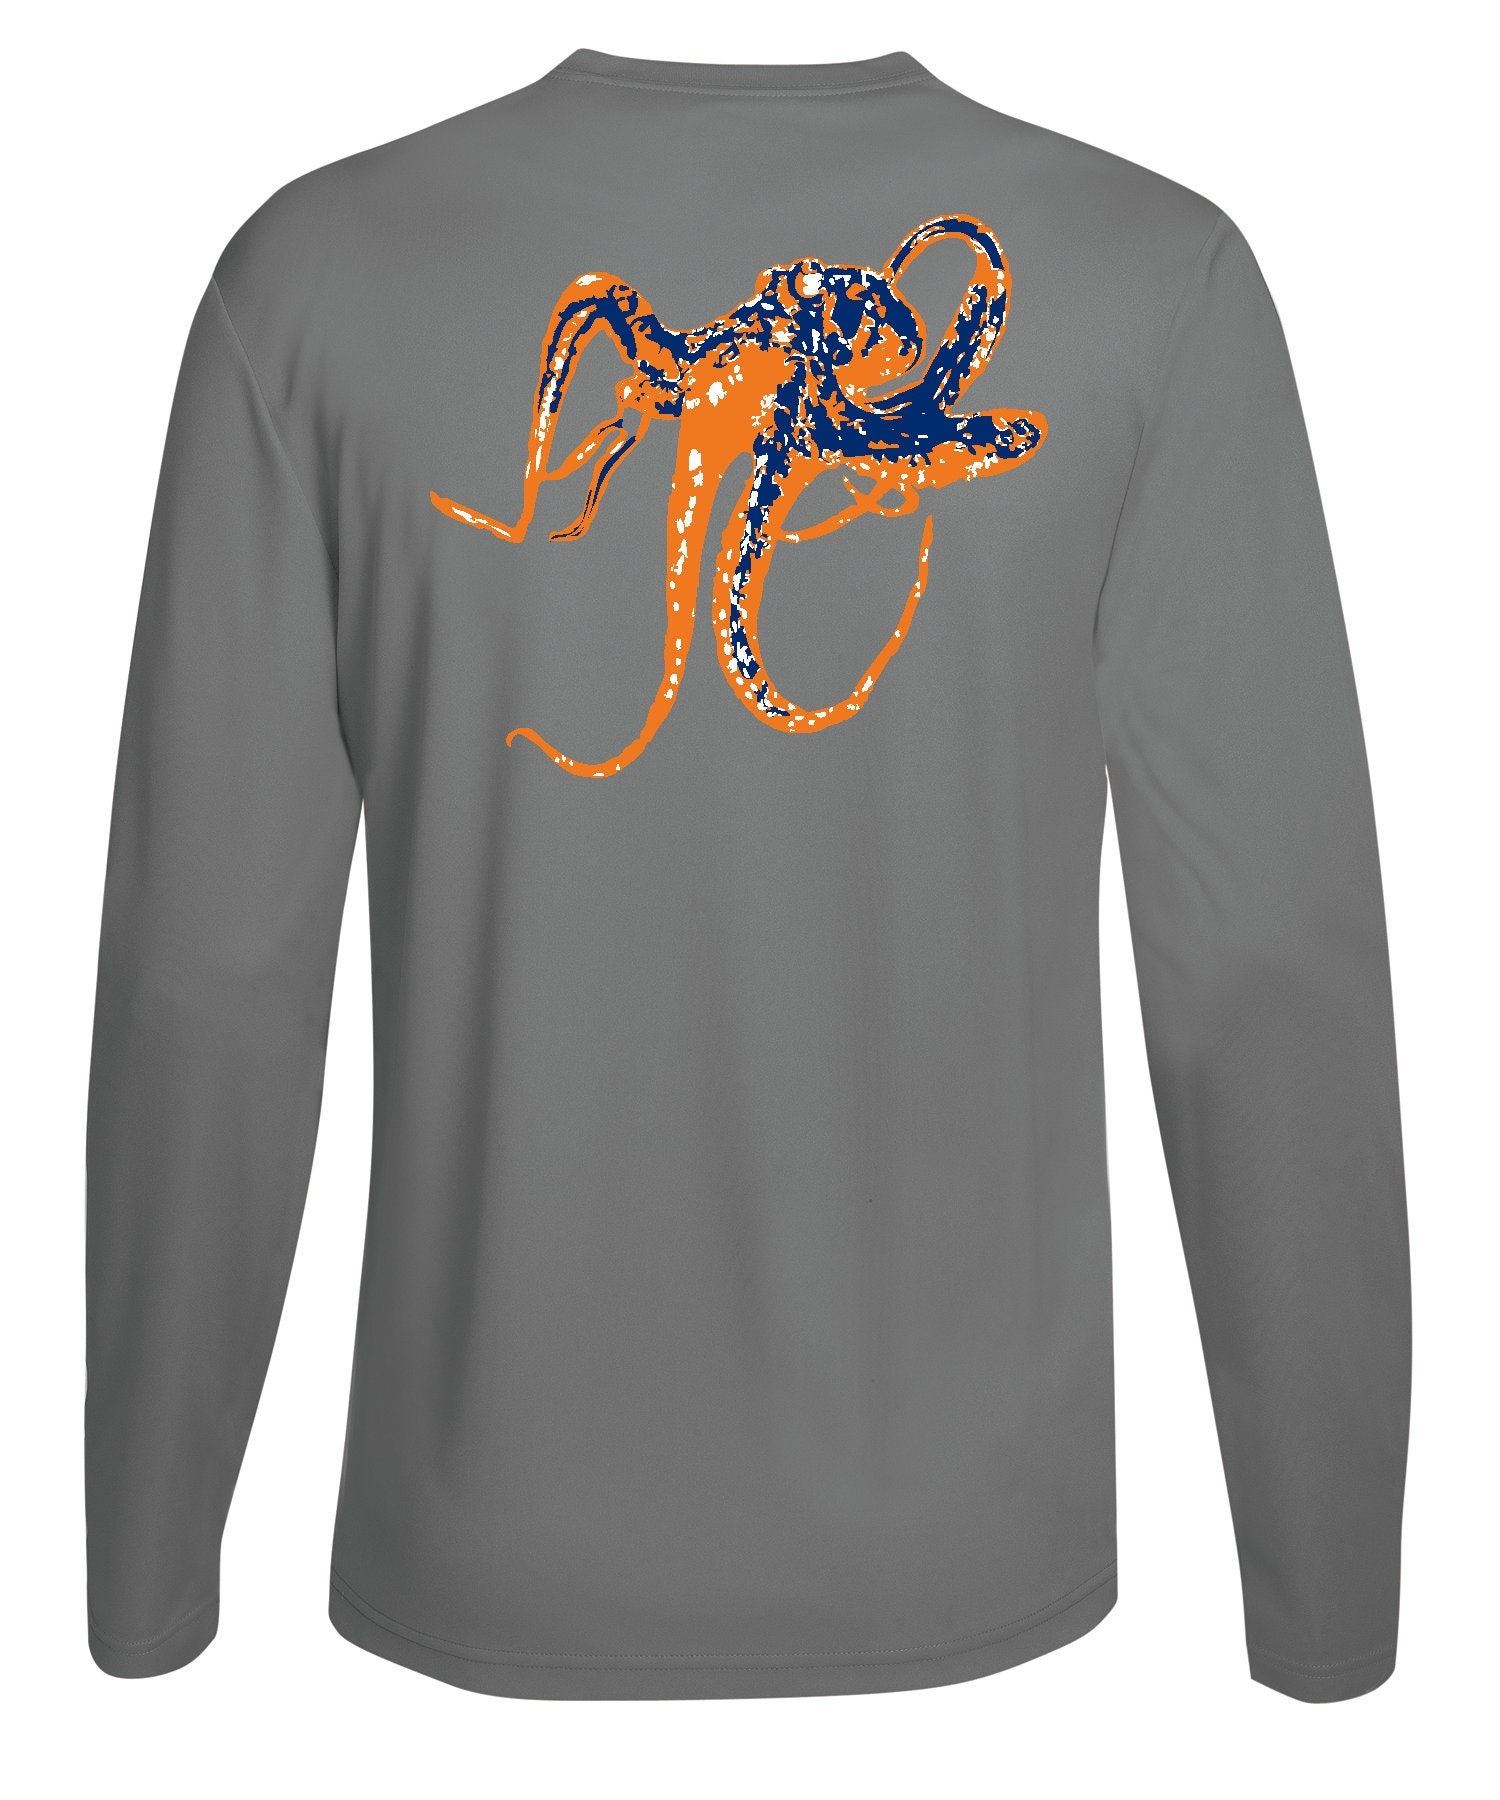 Spearfishing Octopus UV T-Shirt, Mens Protection Long Sleeve Tee, Fishing